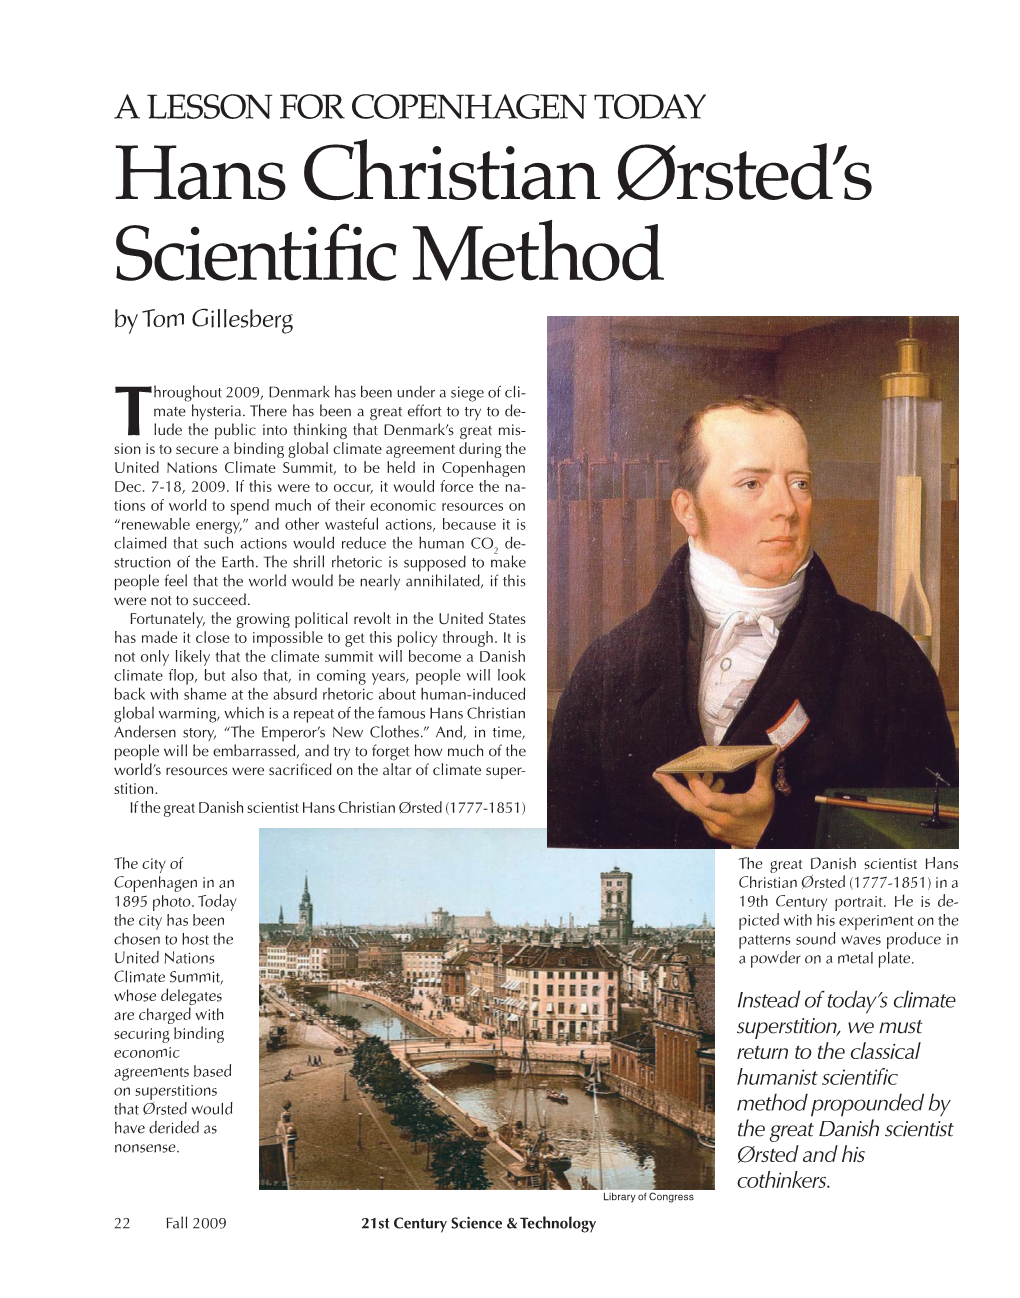 Hans Christian Ørsted's Scientific Method